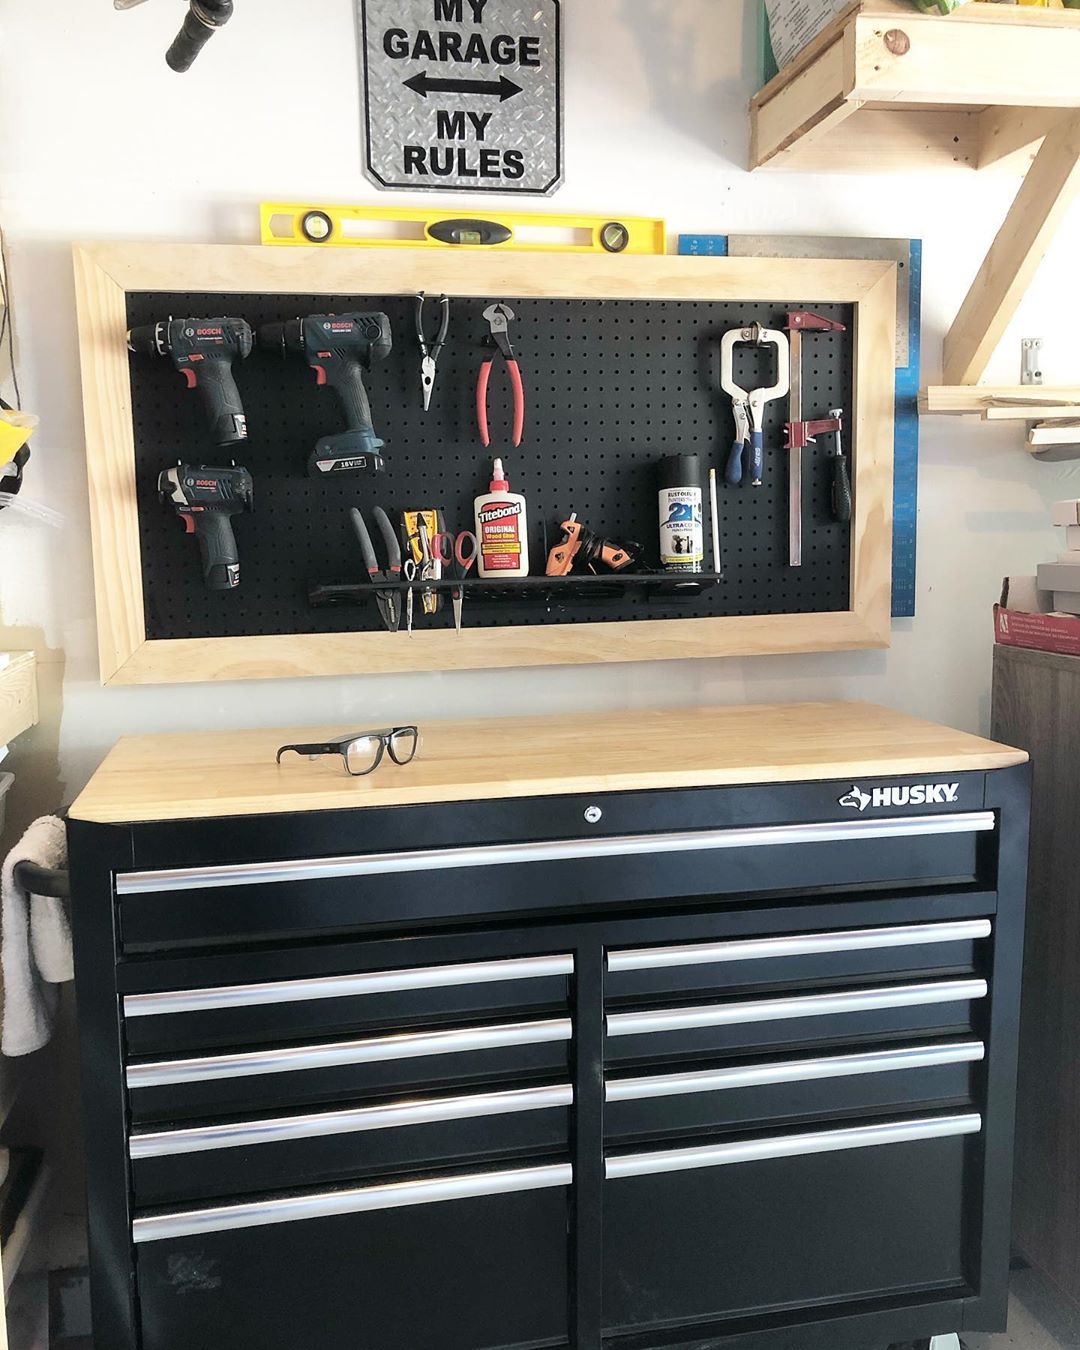 Extra Space Storage, Garage Tool Cabinet Setup